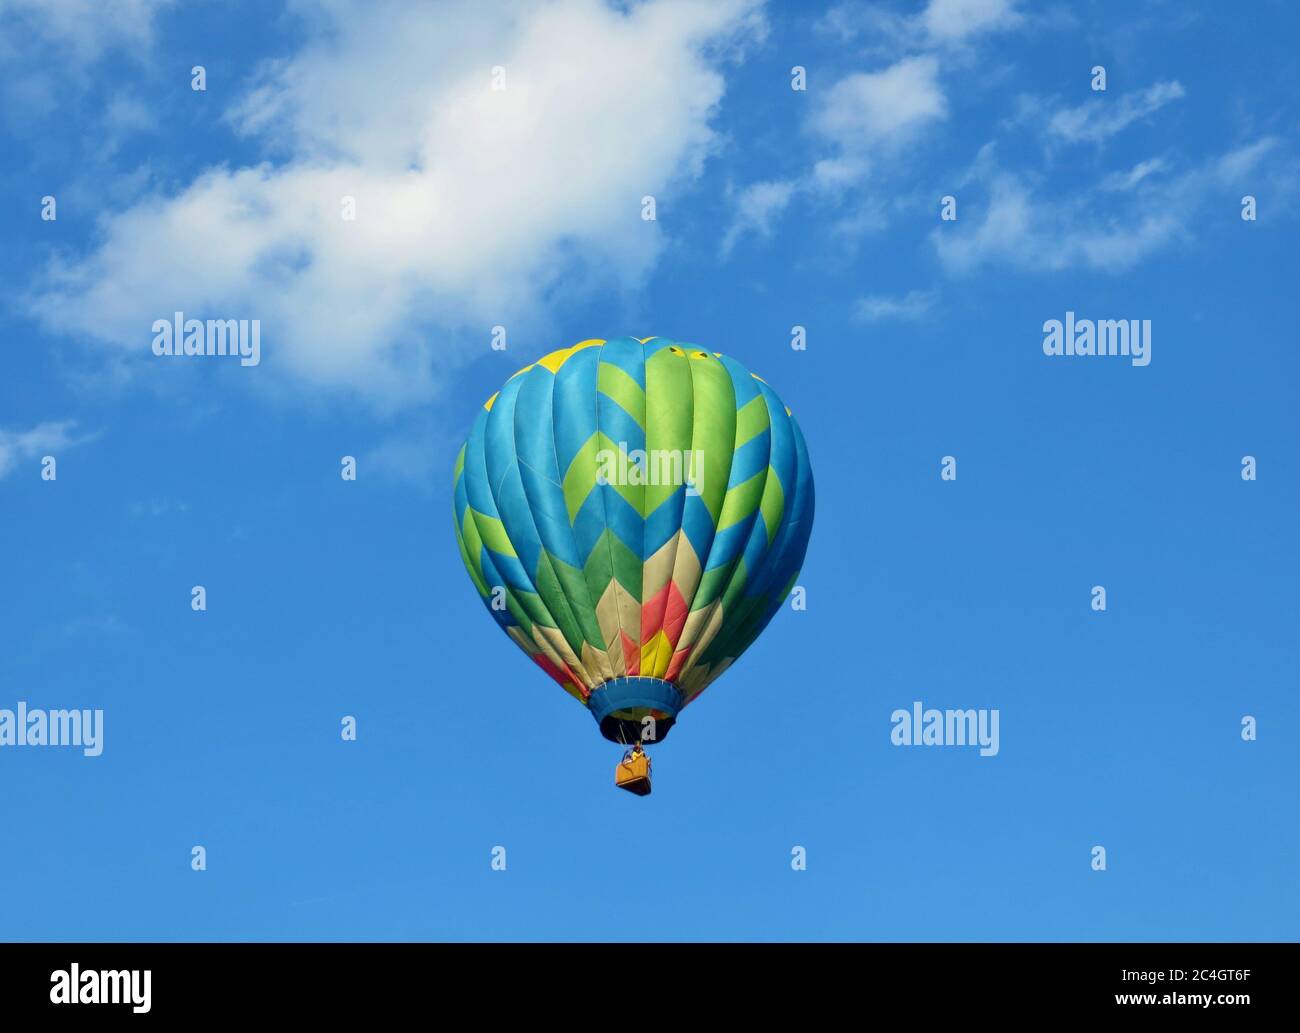 Hot air balloon in a blue sky Stock Photo